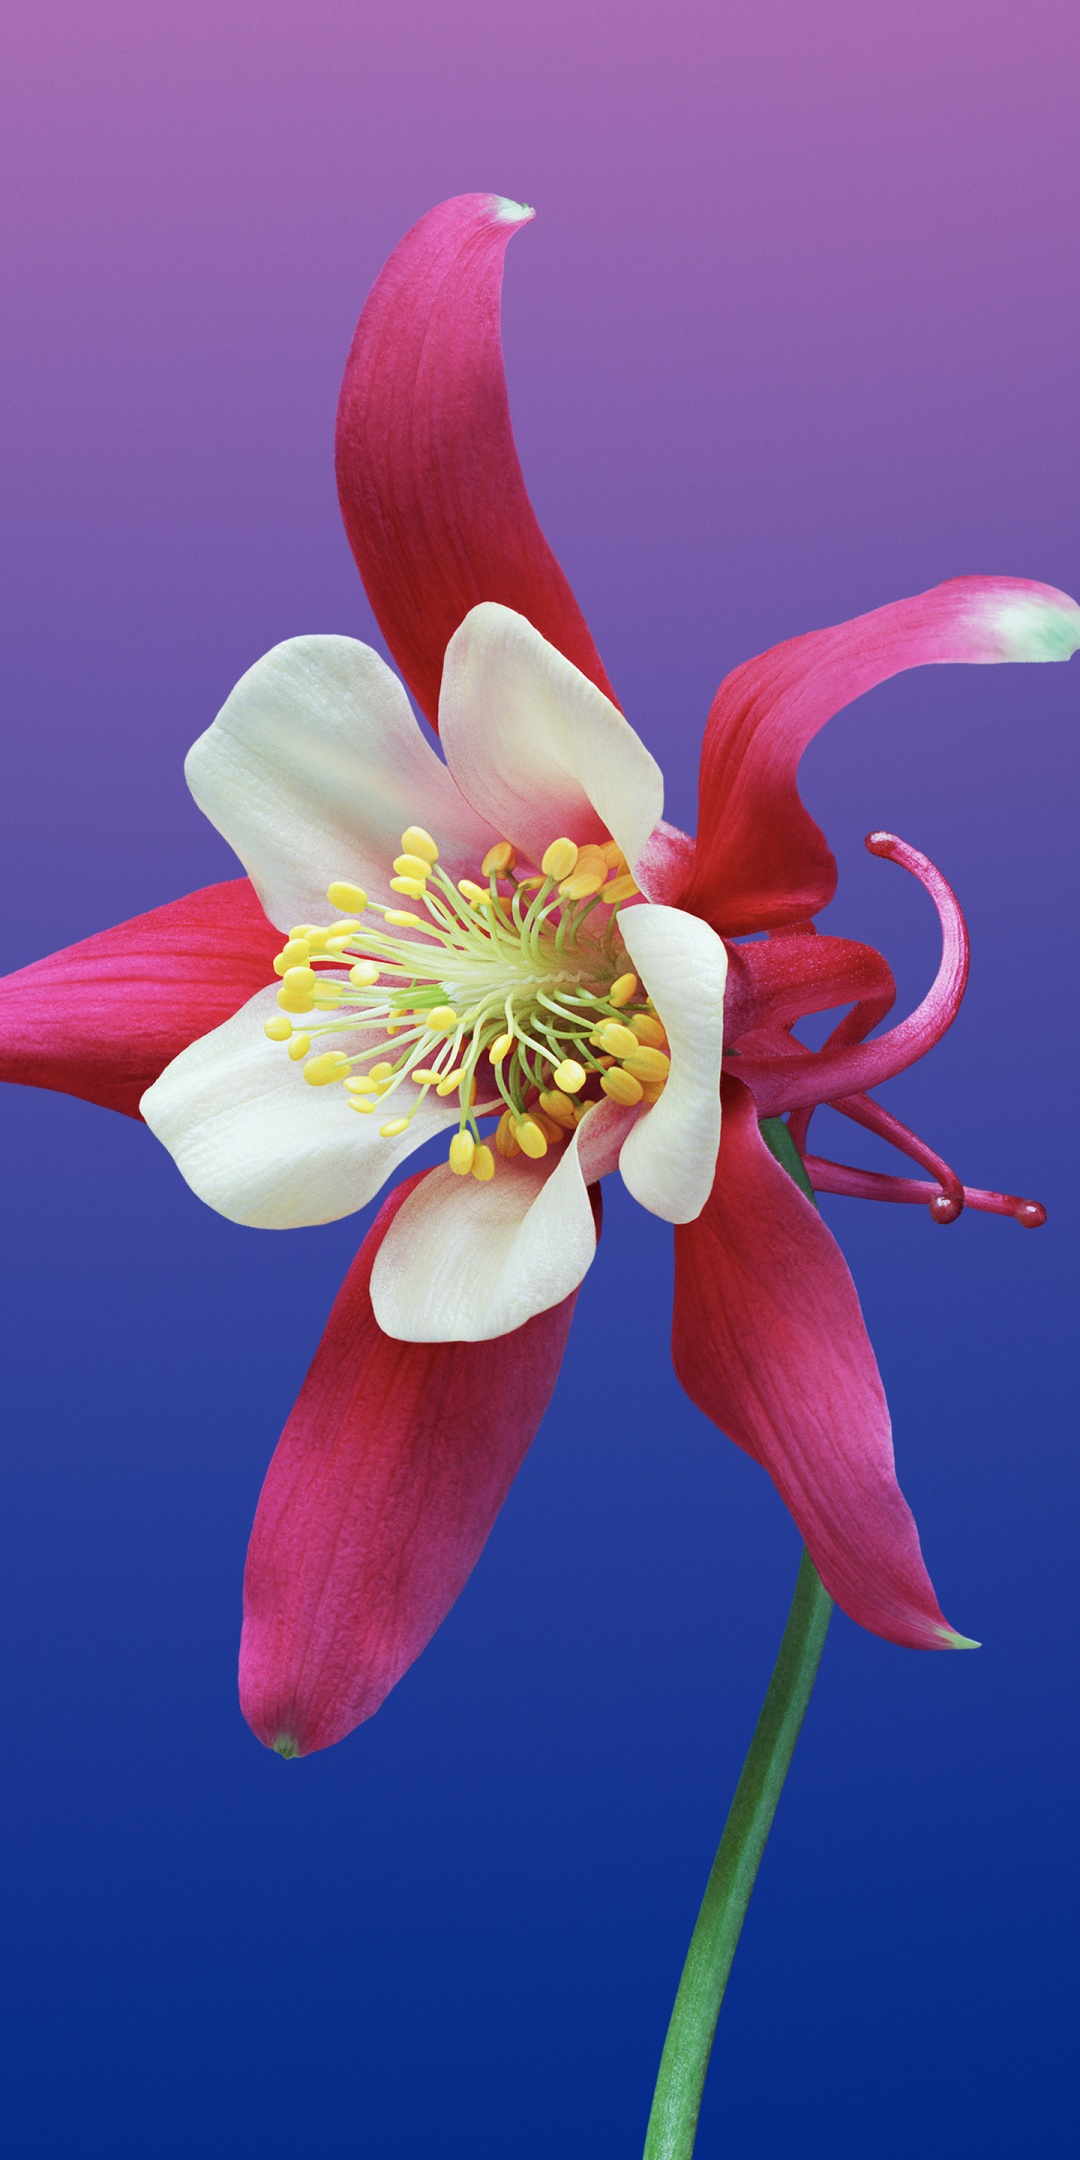 Aquilegia flower Wallpaper 4K, Gradient background, macOS Mojave, iOS